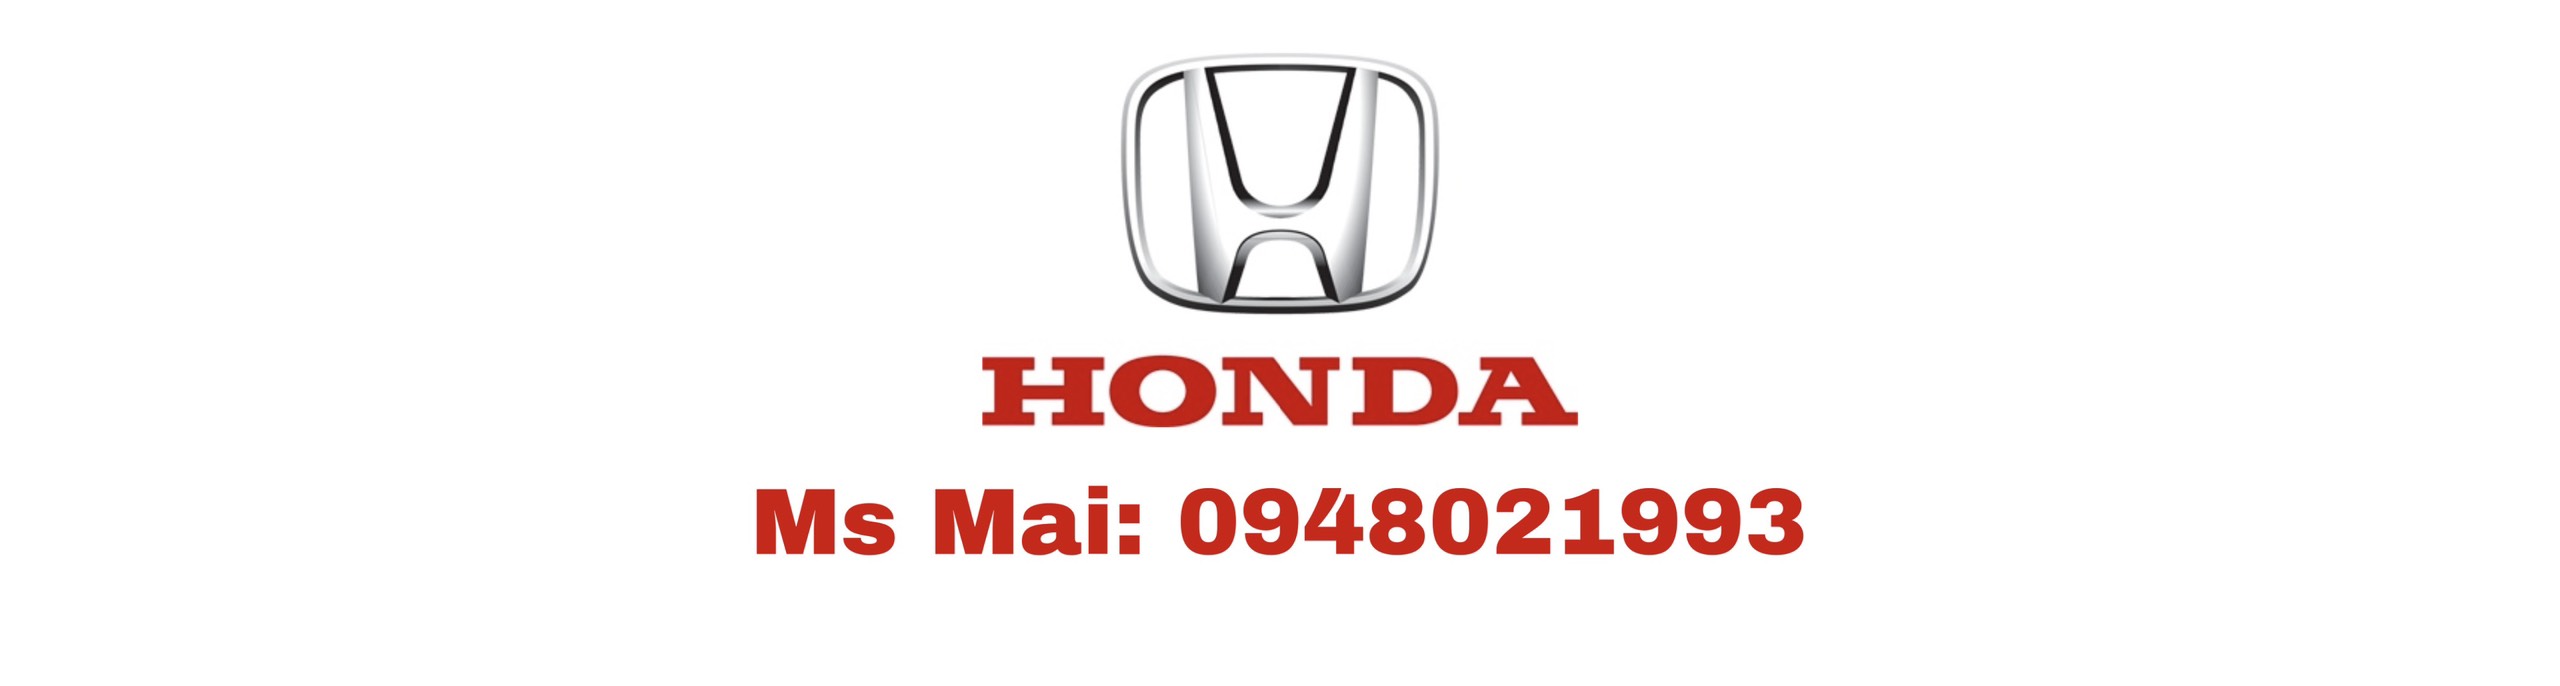 Honda Ôtô Bắc Ninh – Tư Vấn Hotline: 0948021993 (Ms. Mai)